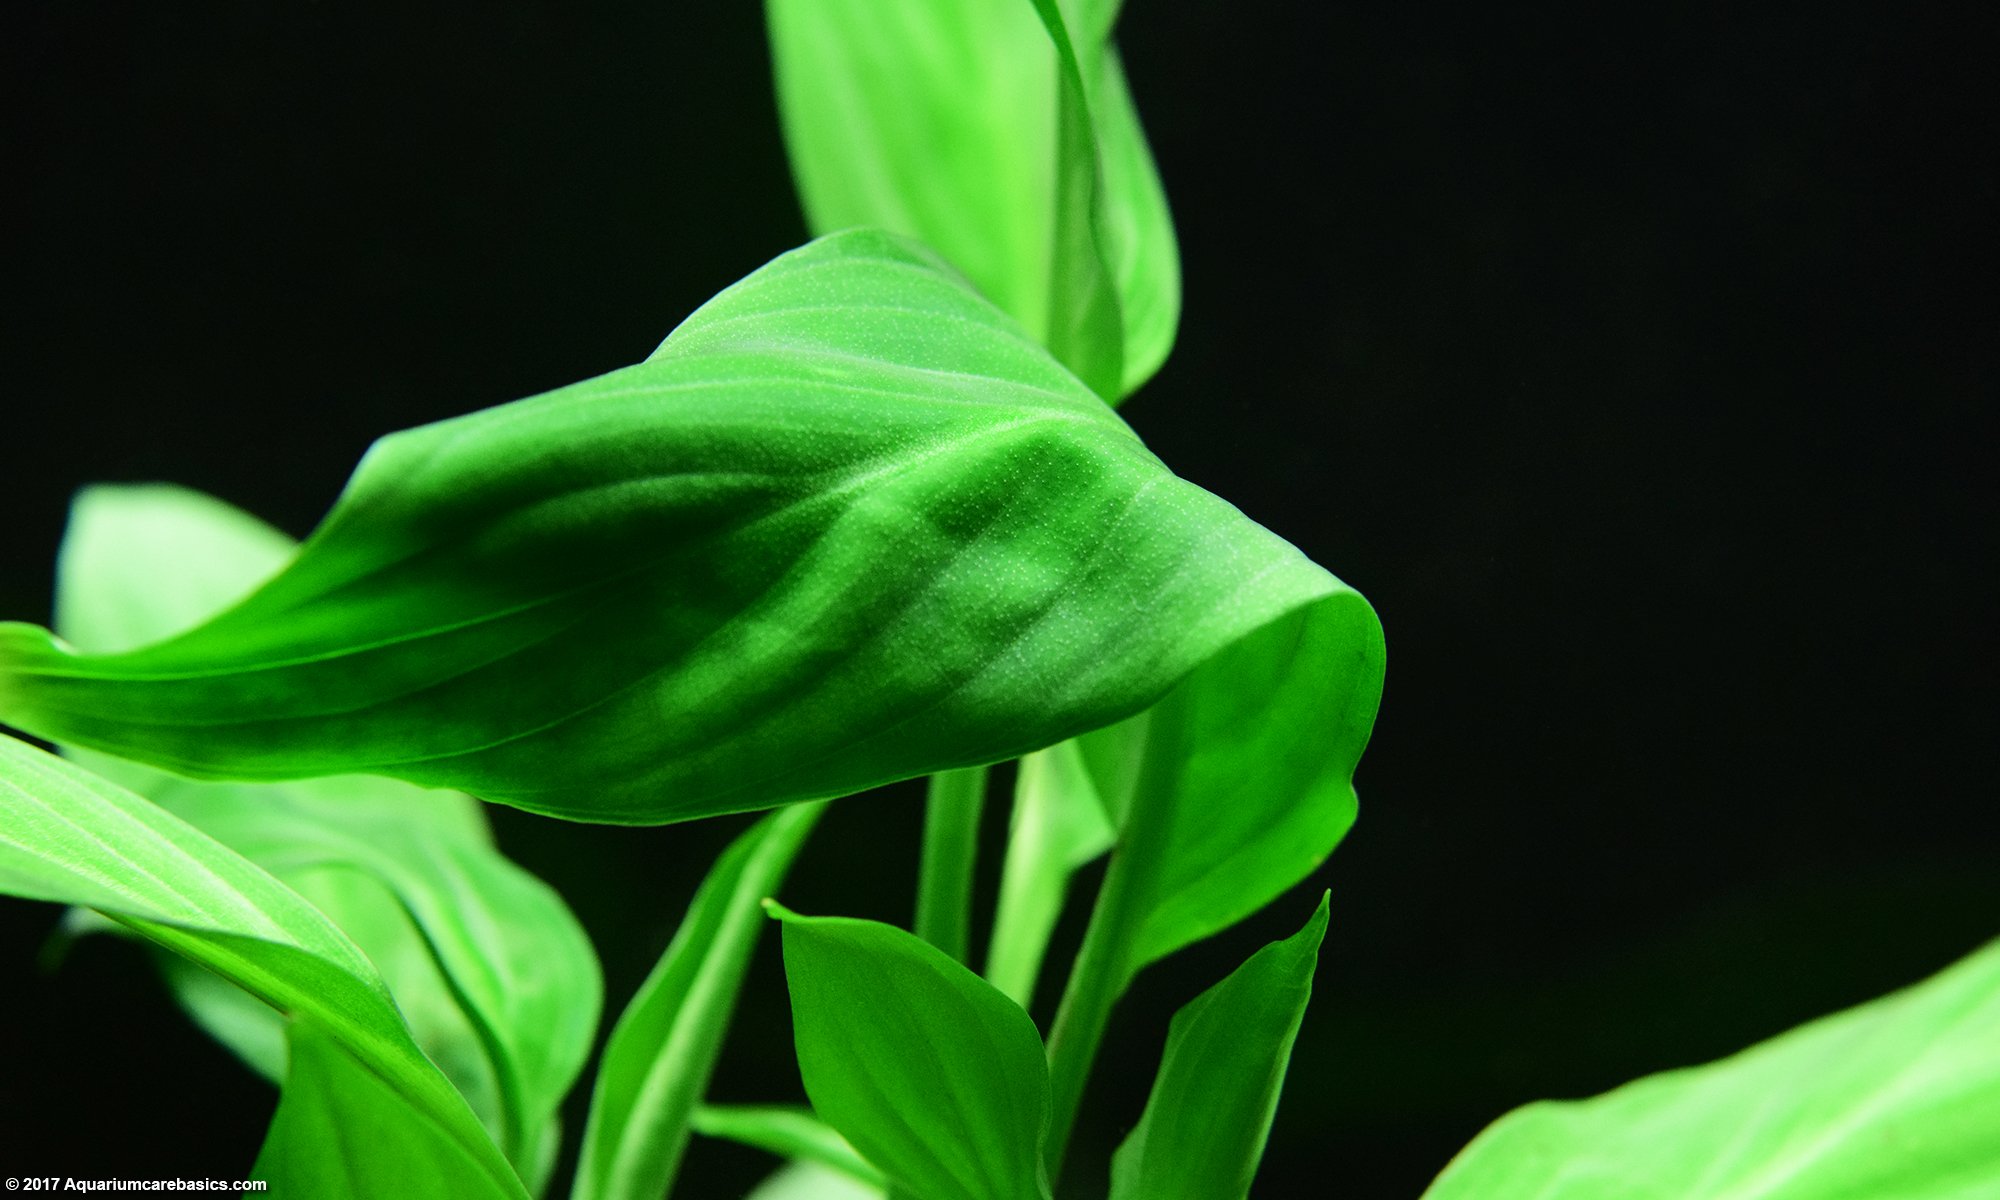 Brazilian Sword Plant Leaf Unfolding Gently